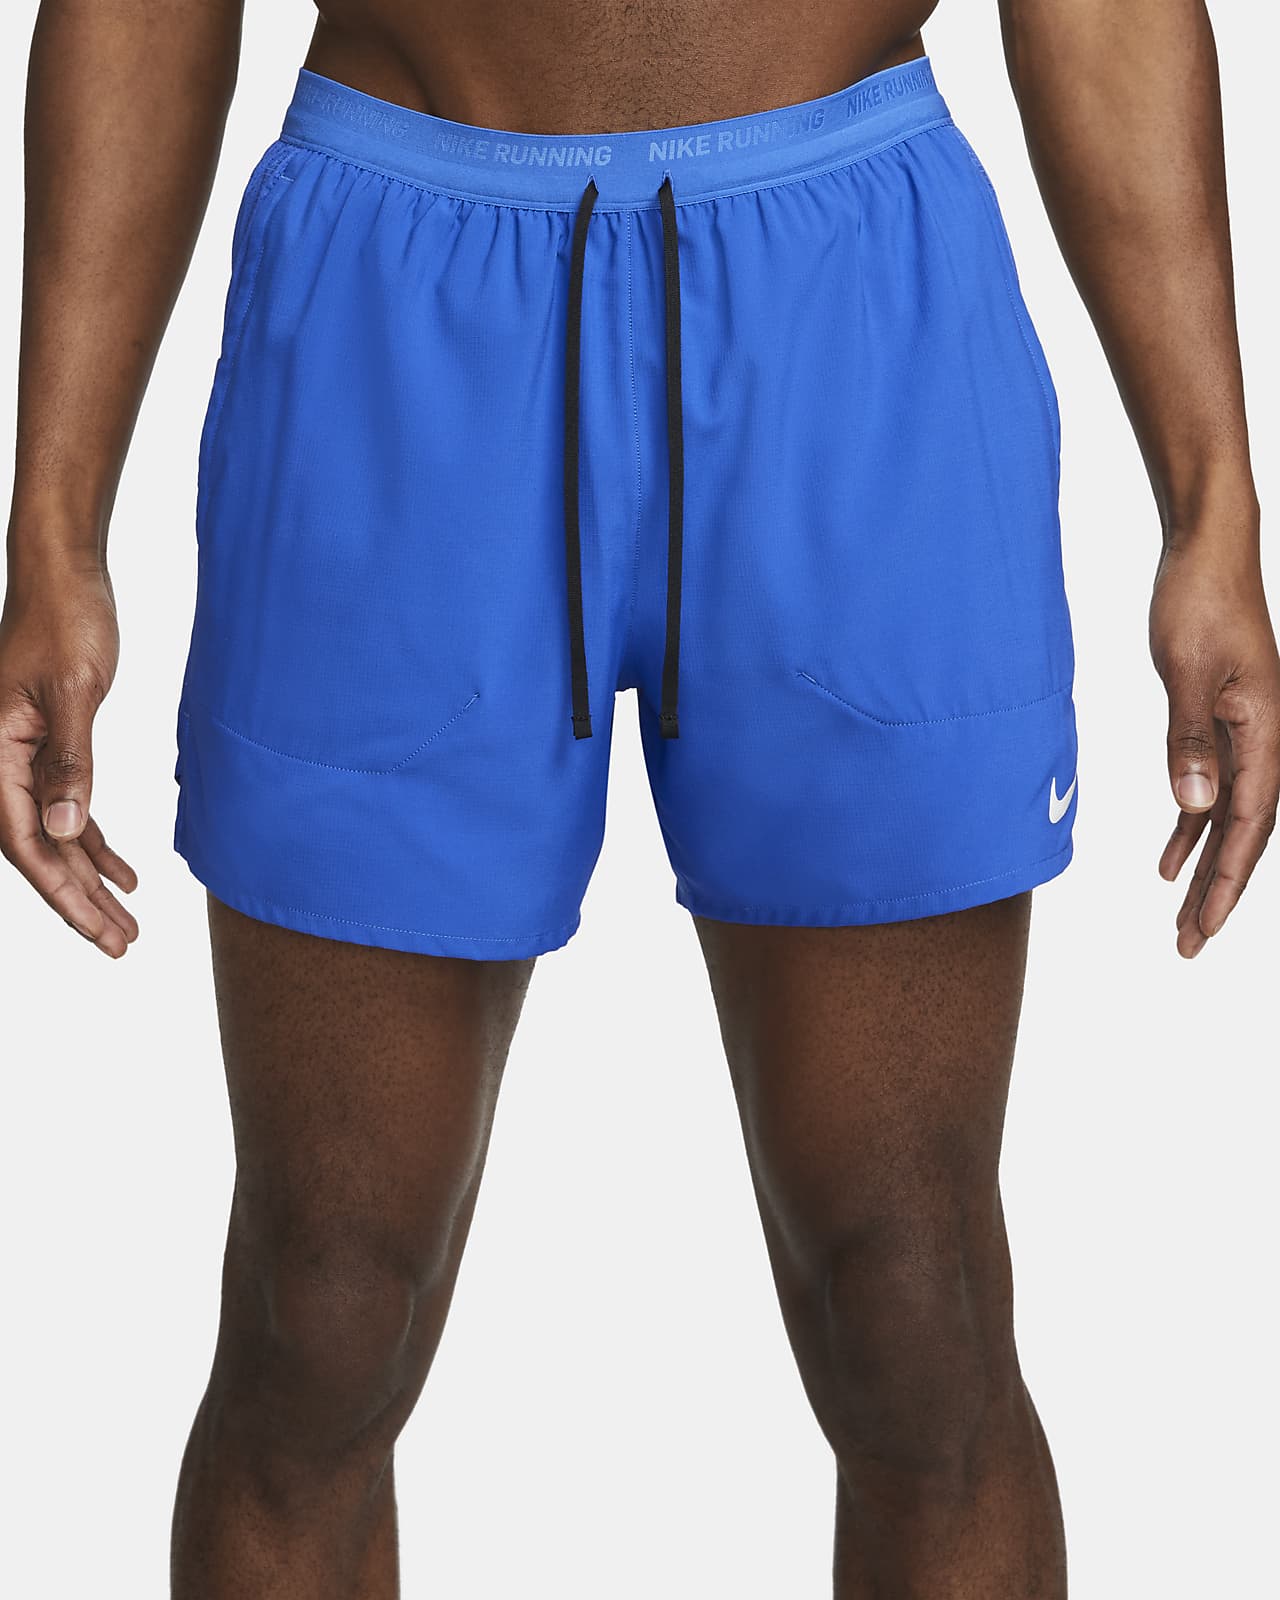 nike men's shorts 5 inch